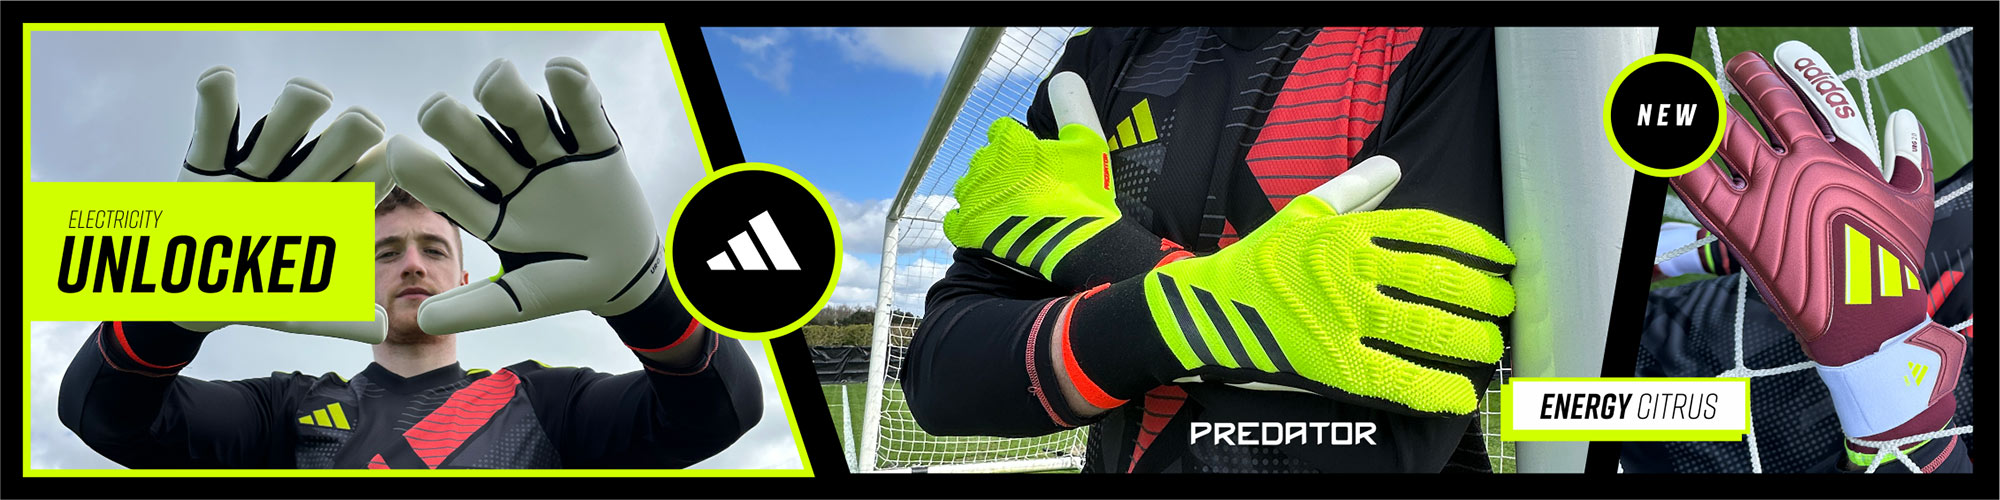 adidas Energy Citrus Electricity Pack Goalkeeper Gloves